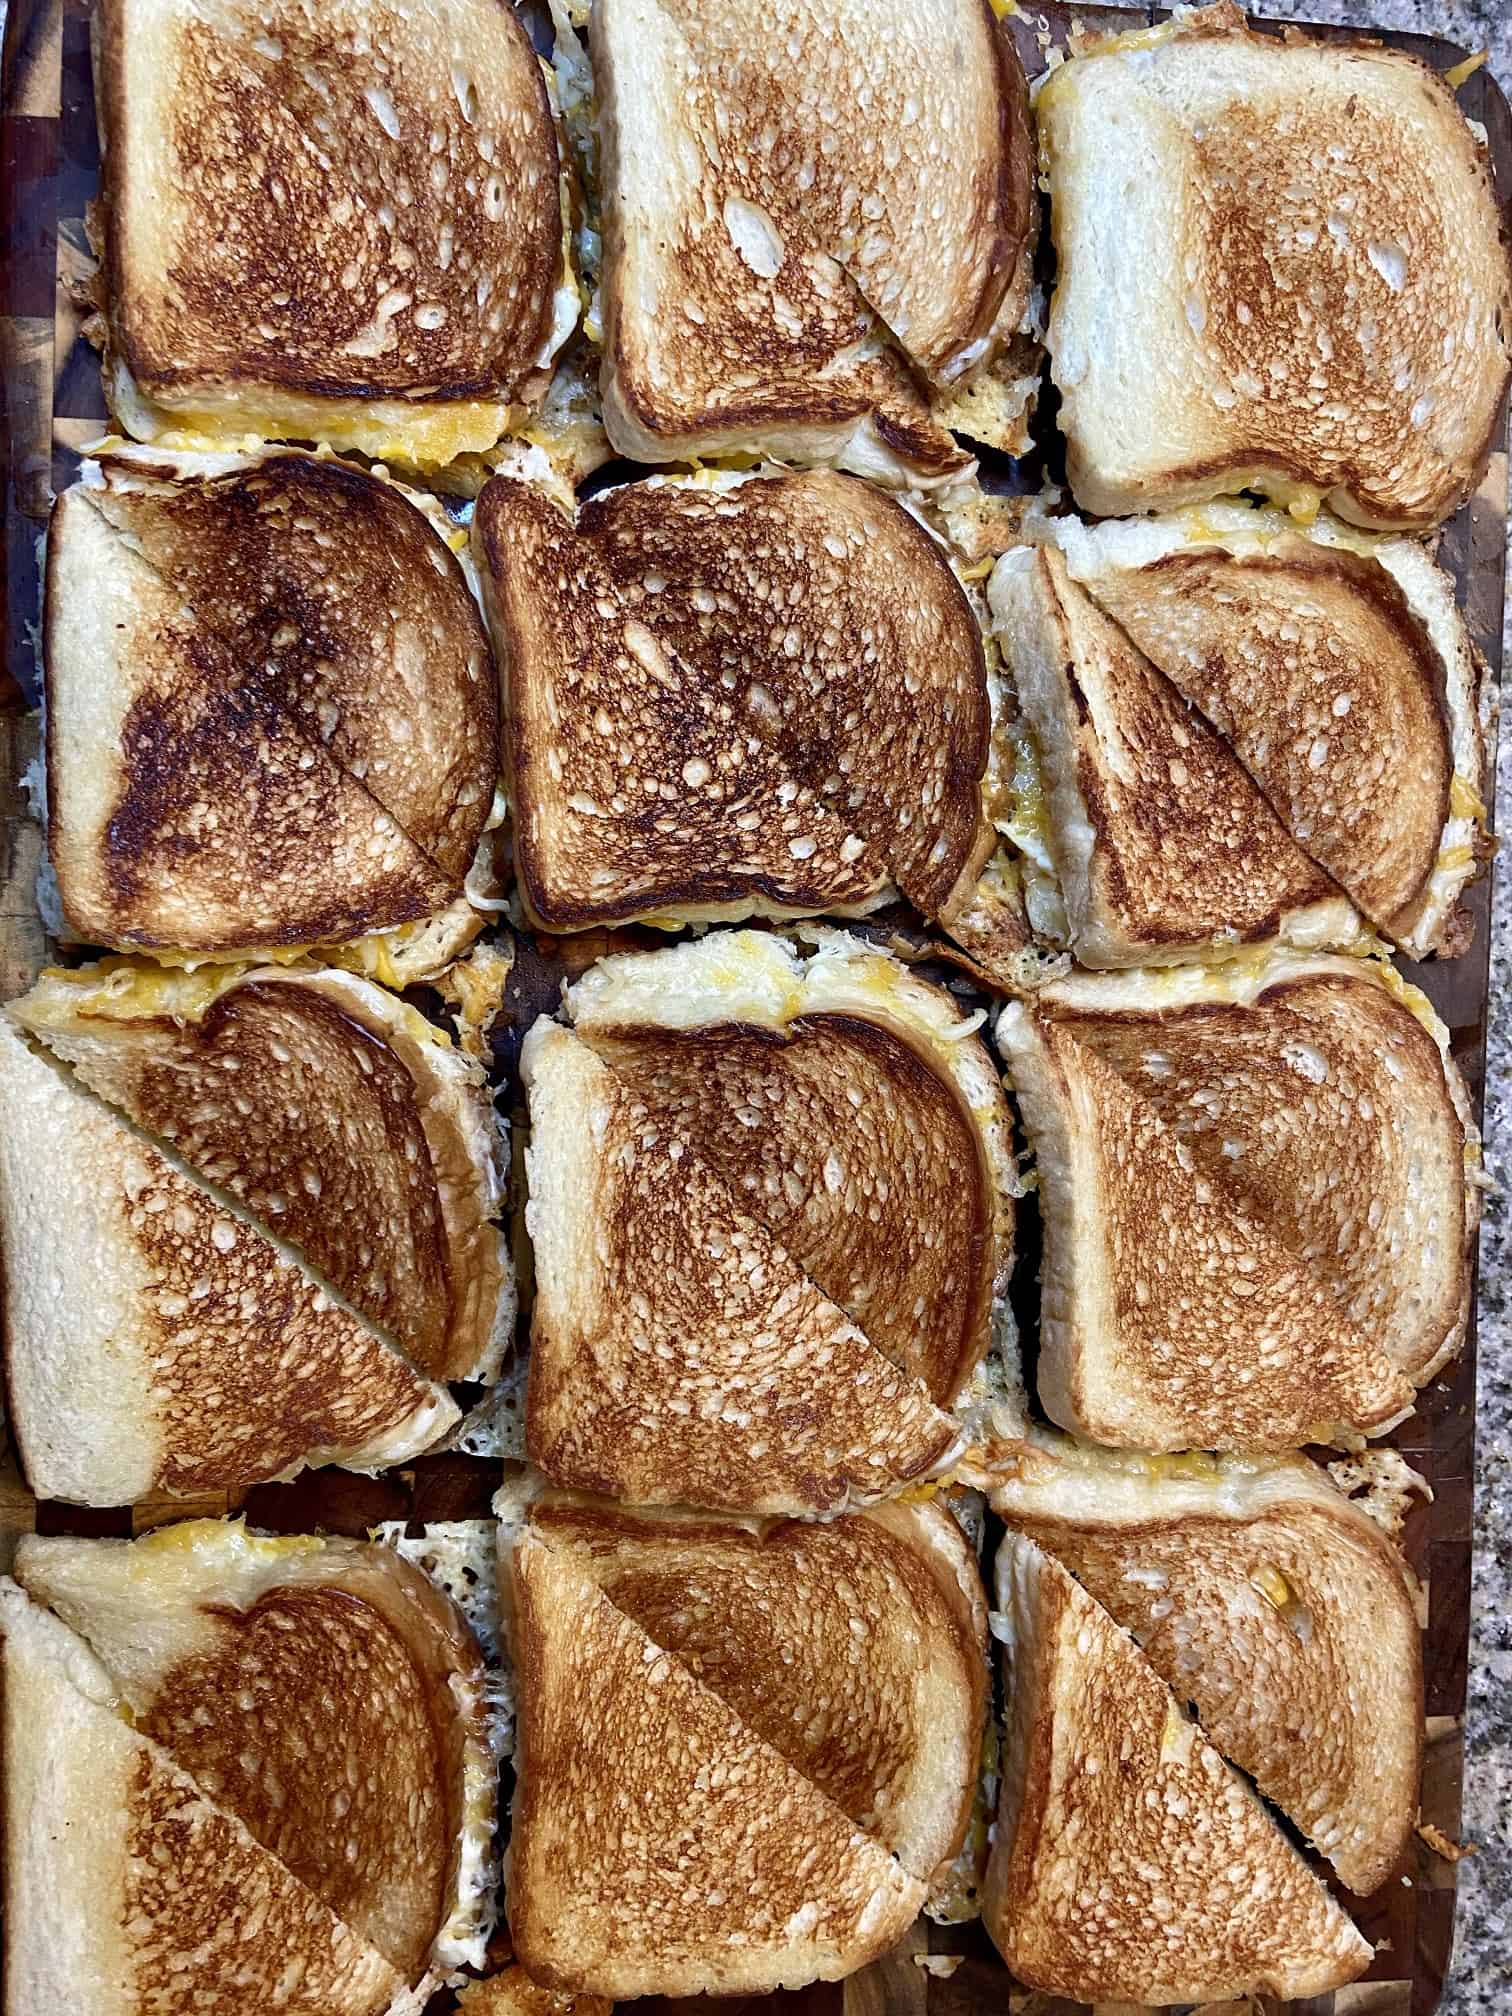 https://www.flypeachpie.com/wp-content/uploads/2022/02/sheet-pan-grilled-cheese-sandwiches-2.jpg